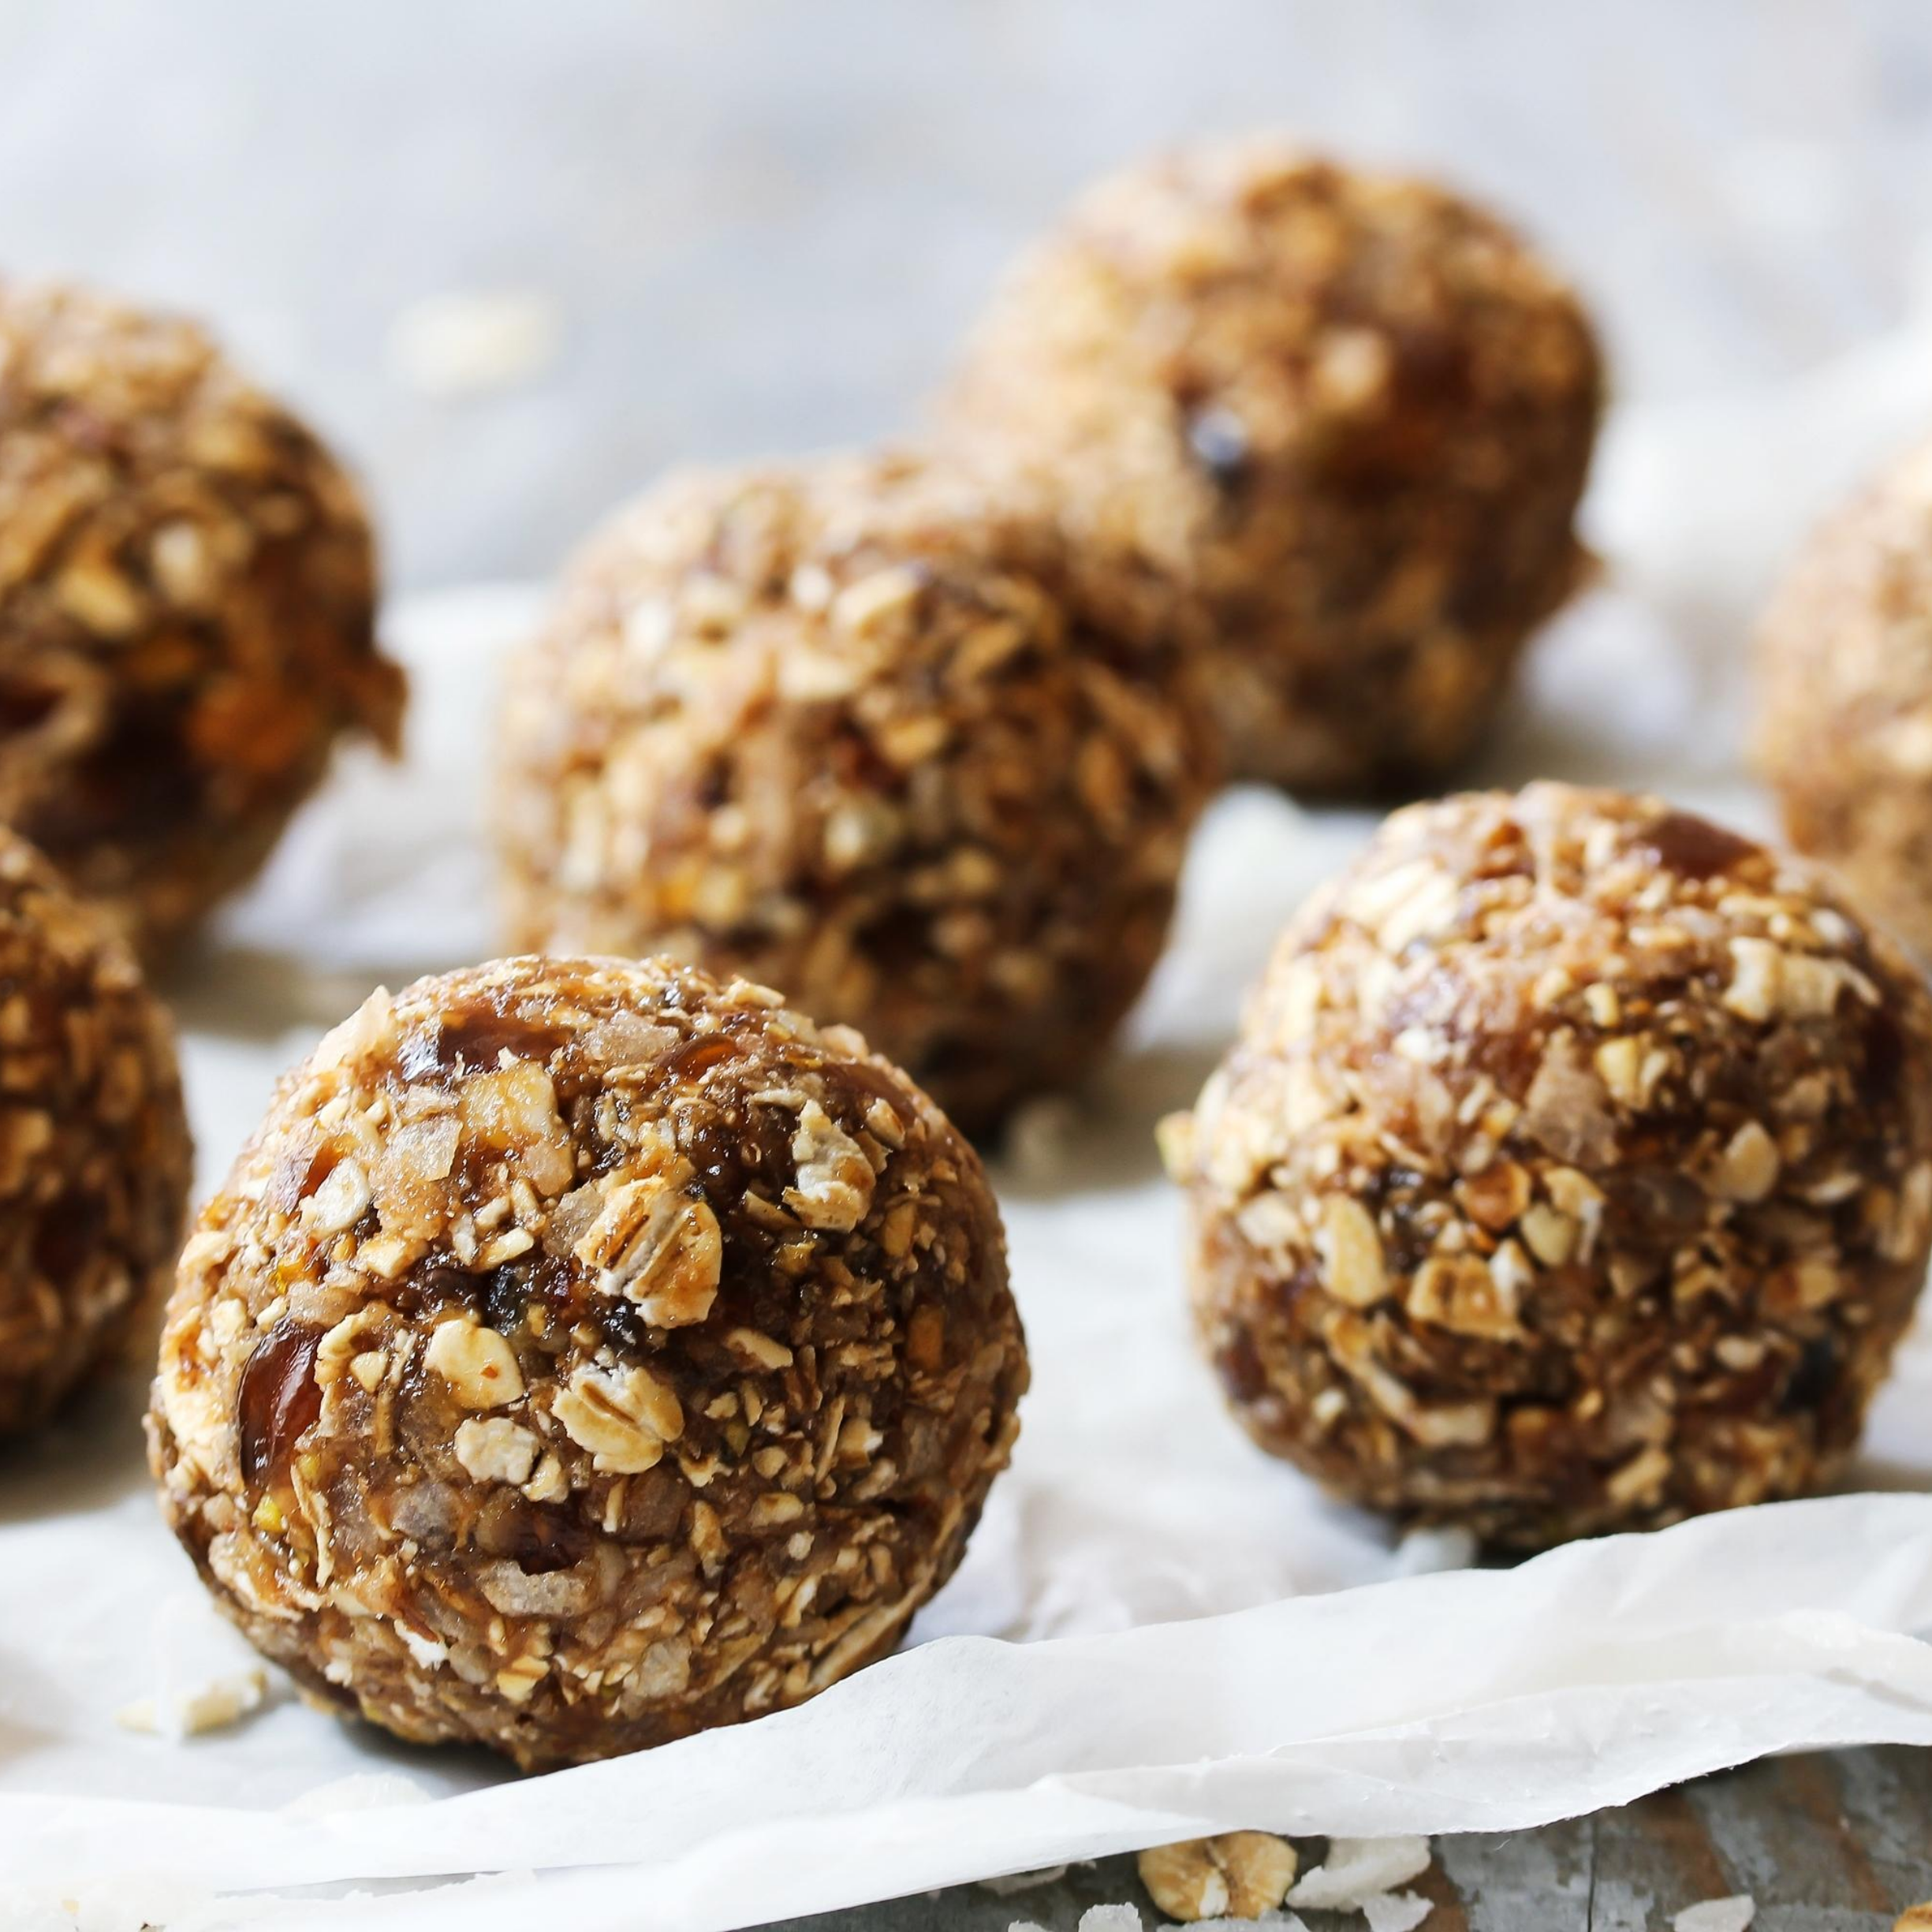 Brown energy oat balls on white baking sheet, represents “Dorm Room Friendly Protein Packed Recipes” program